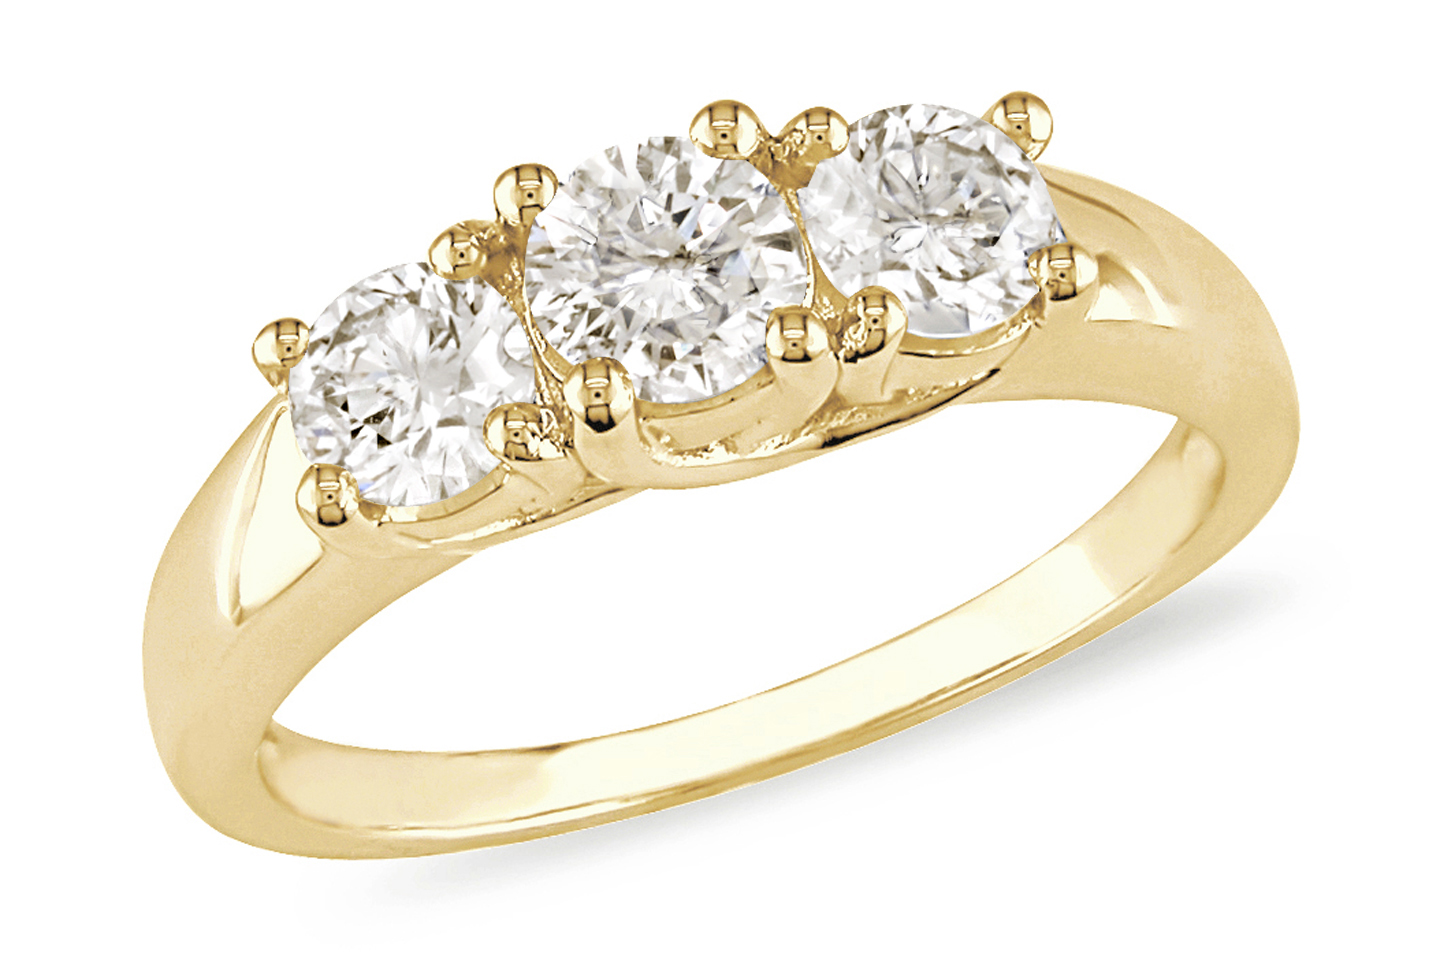  Diamond  Jewelery Engagement  Wedding  Rings  Earrings Fashion 